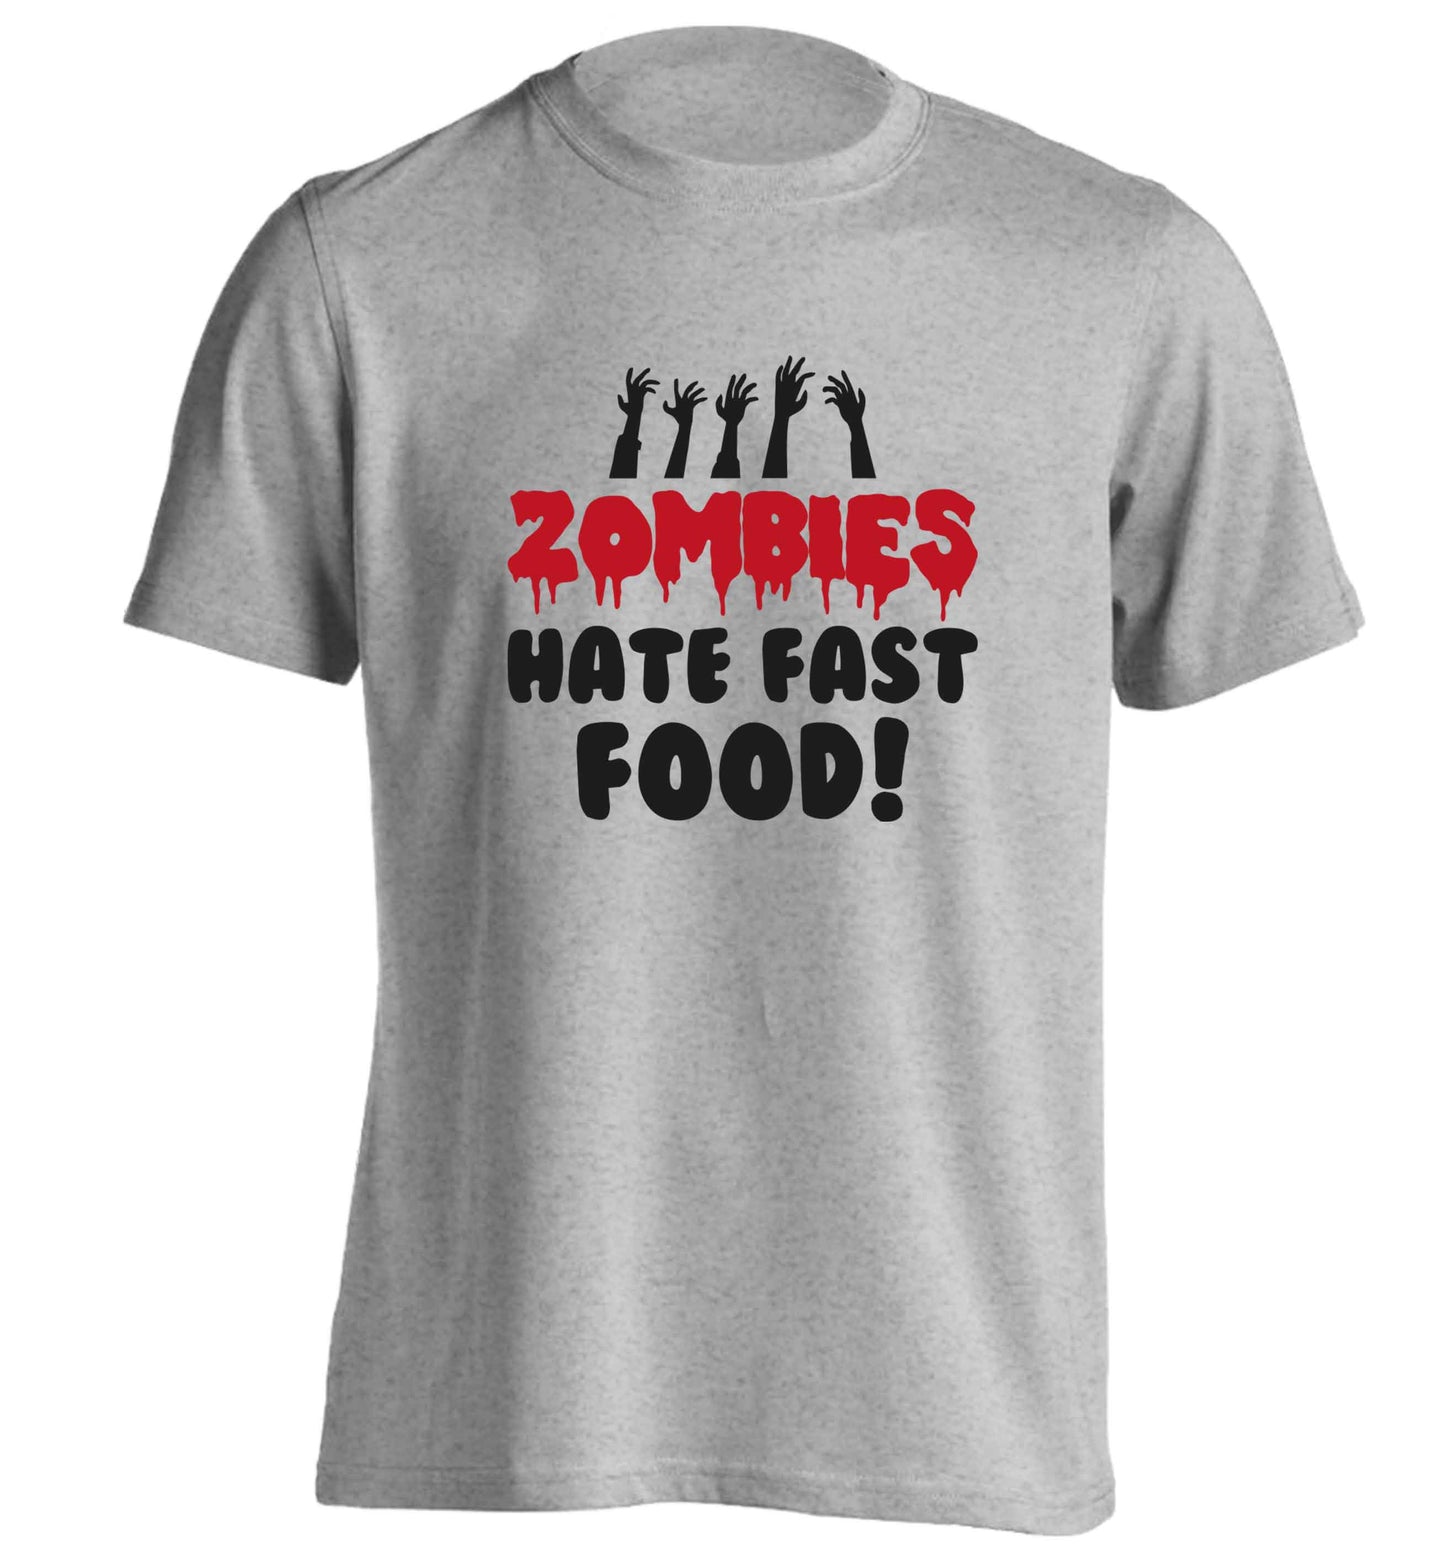 Zombies hate fast food adults unisex grey Tshirt 2XL